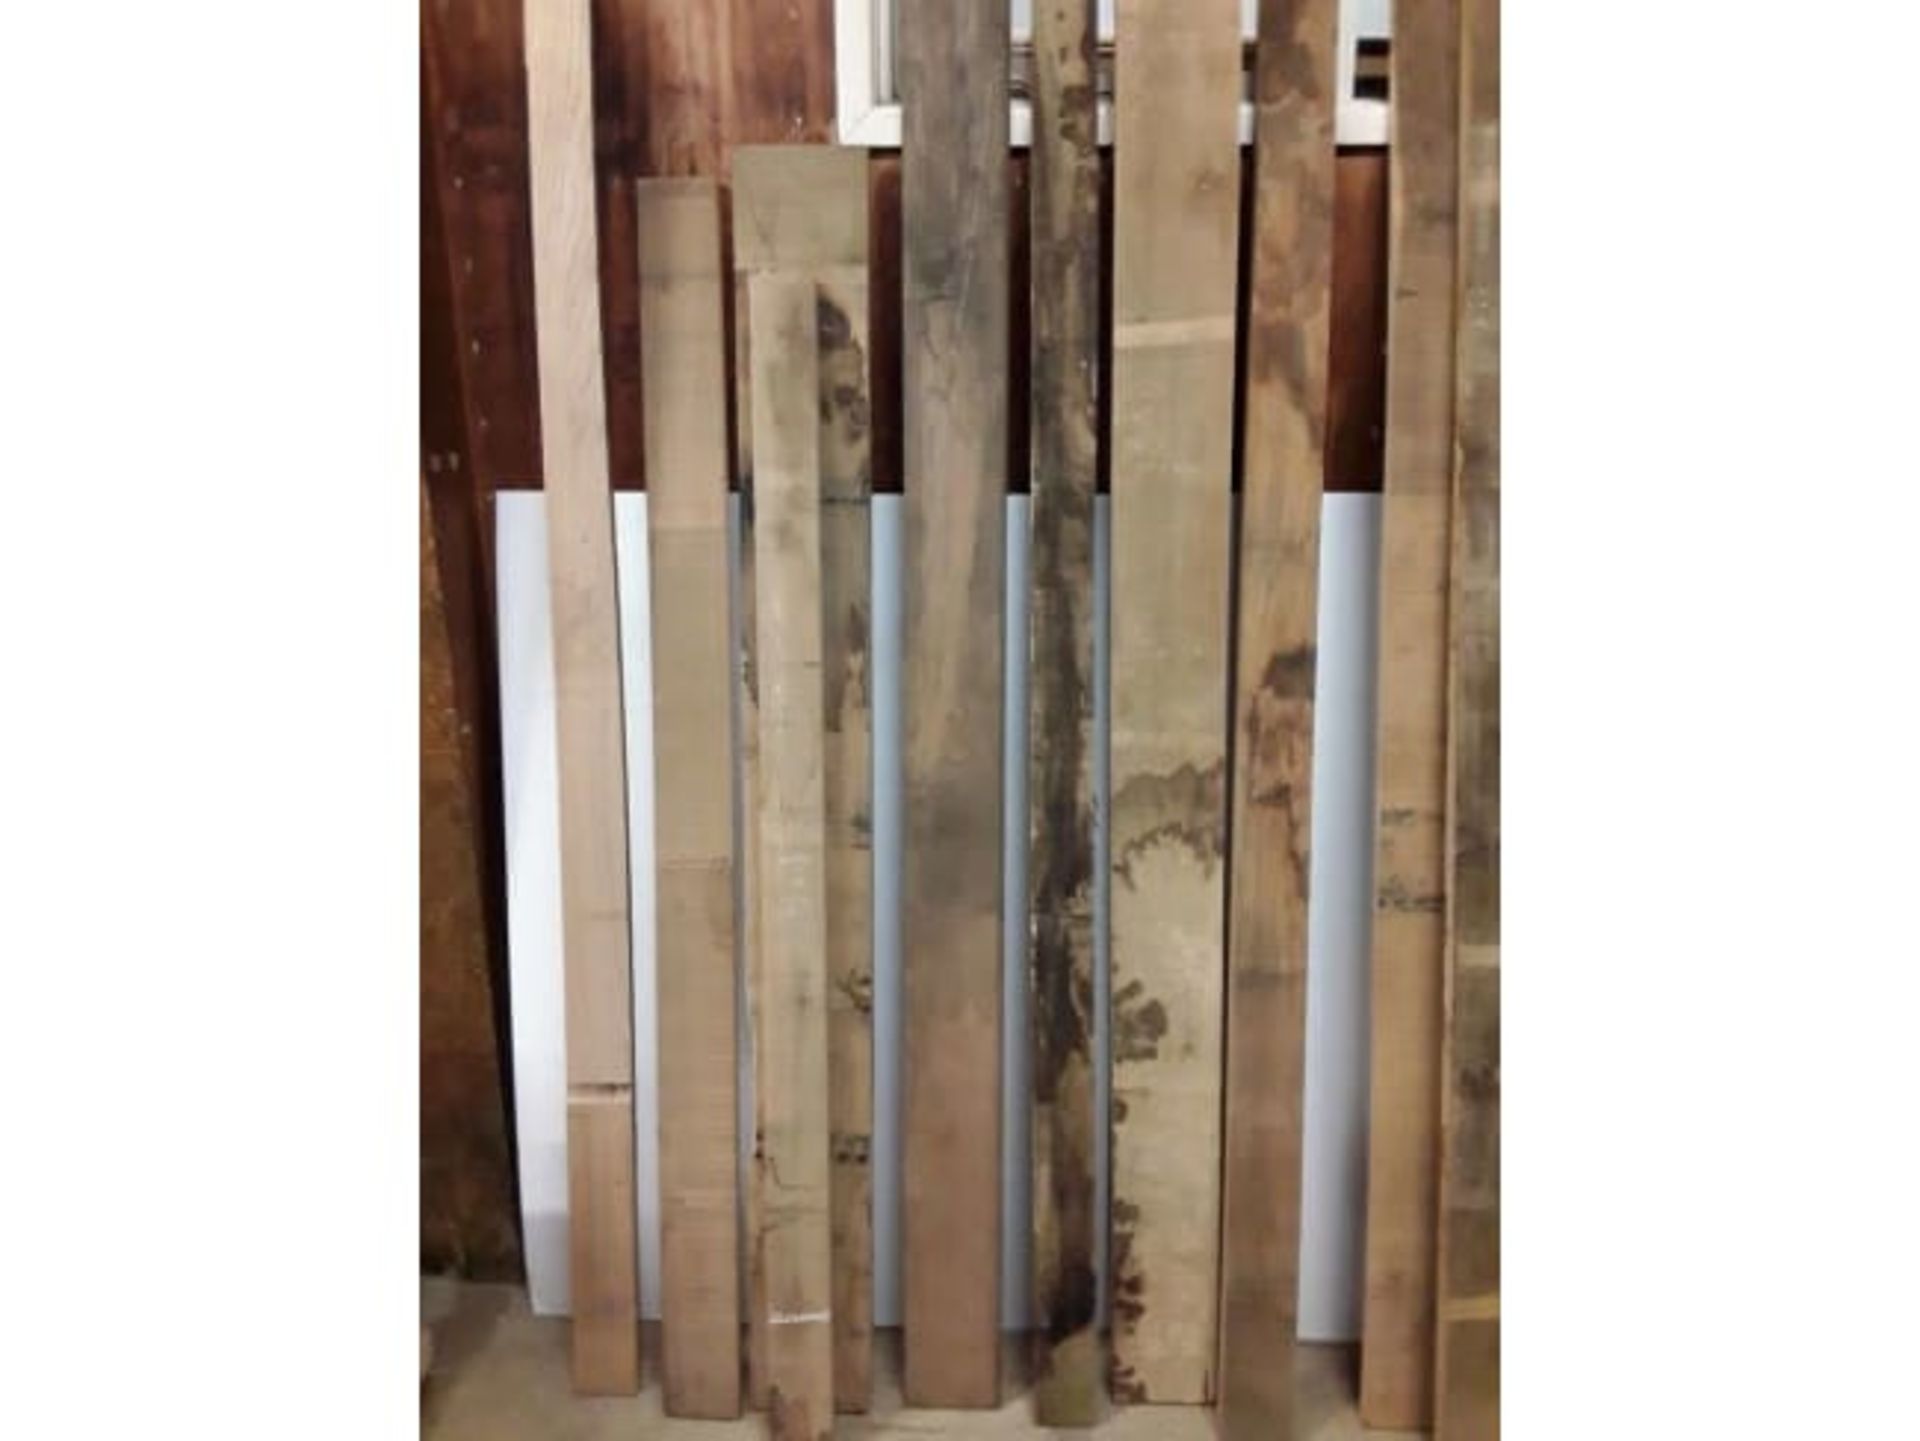 25x Hardwood Kiln Dried Sawn English Oak Boards / Planks / Timber Offcuts - Image 2 of 3